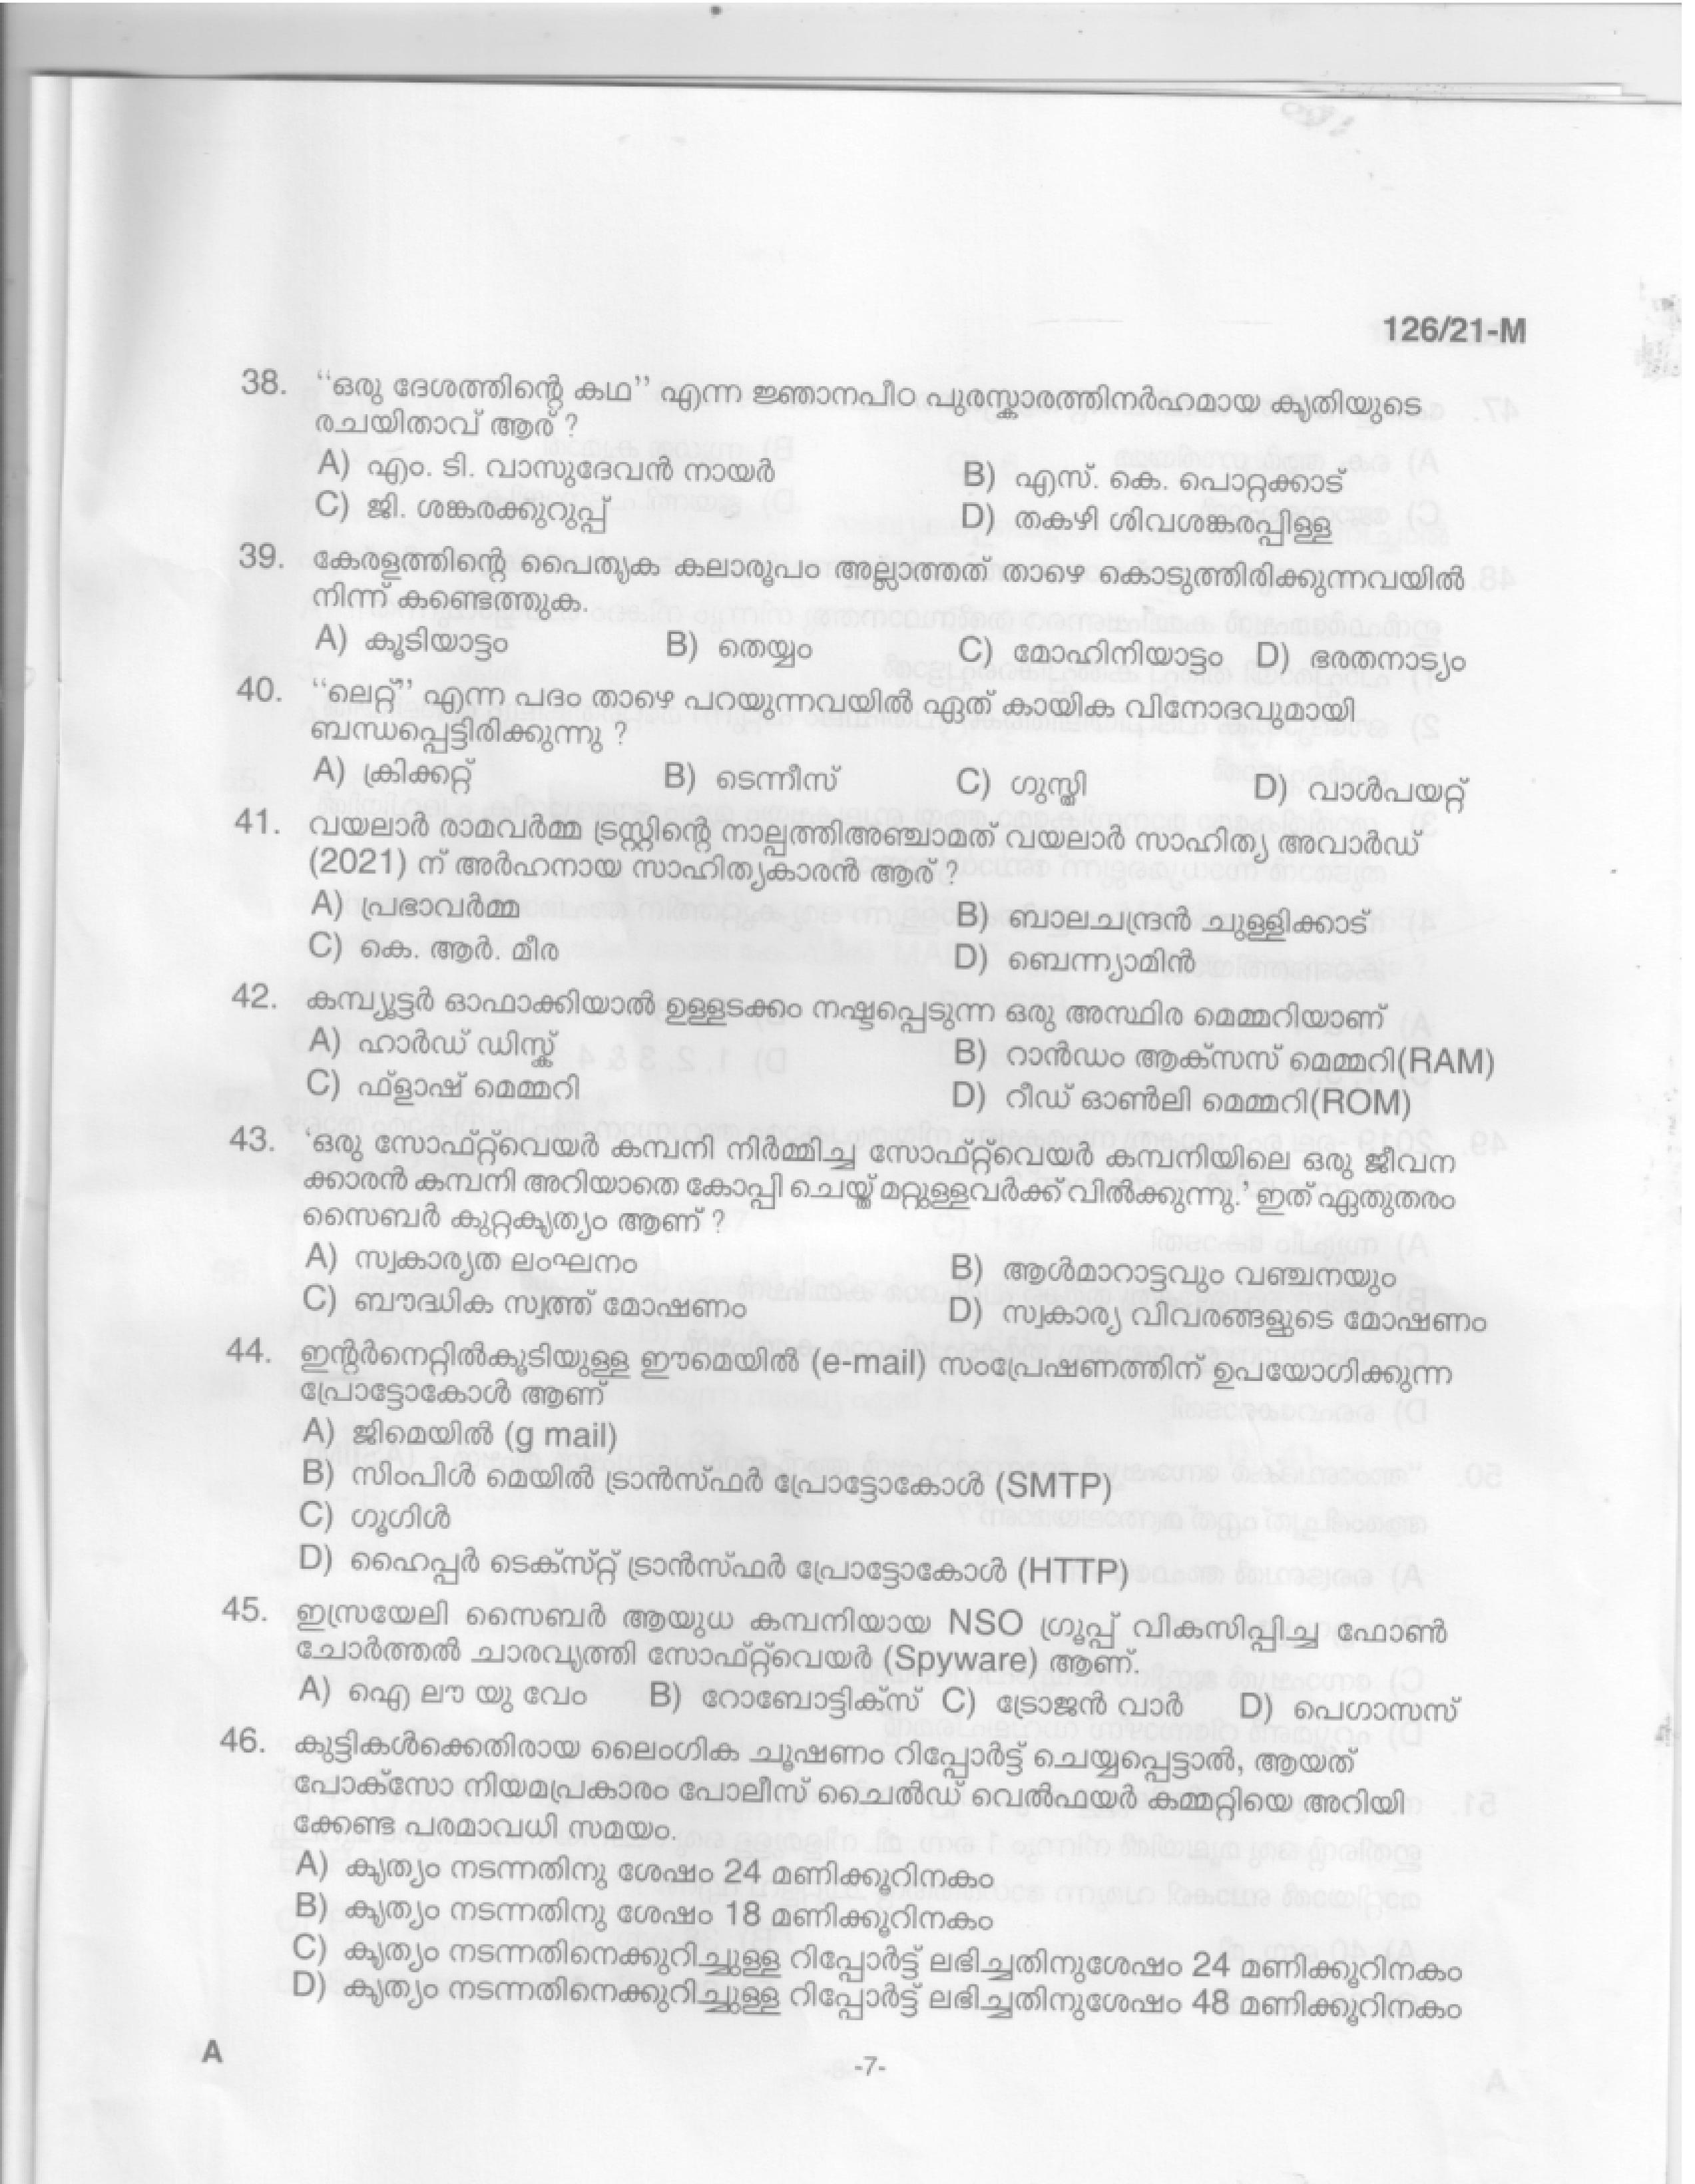 Upto SSLC Level Main Exam Assistant Compiler Malayalam Exam 2021 Code 1262021 M 5